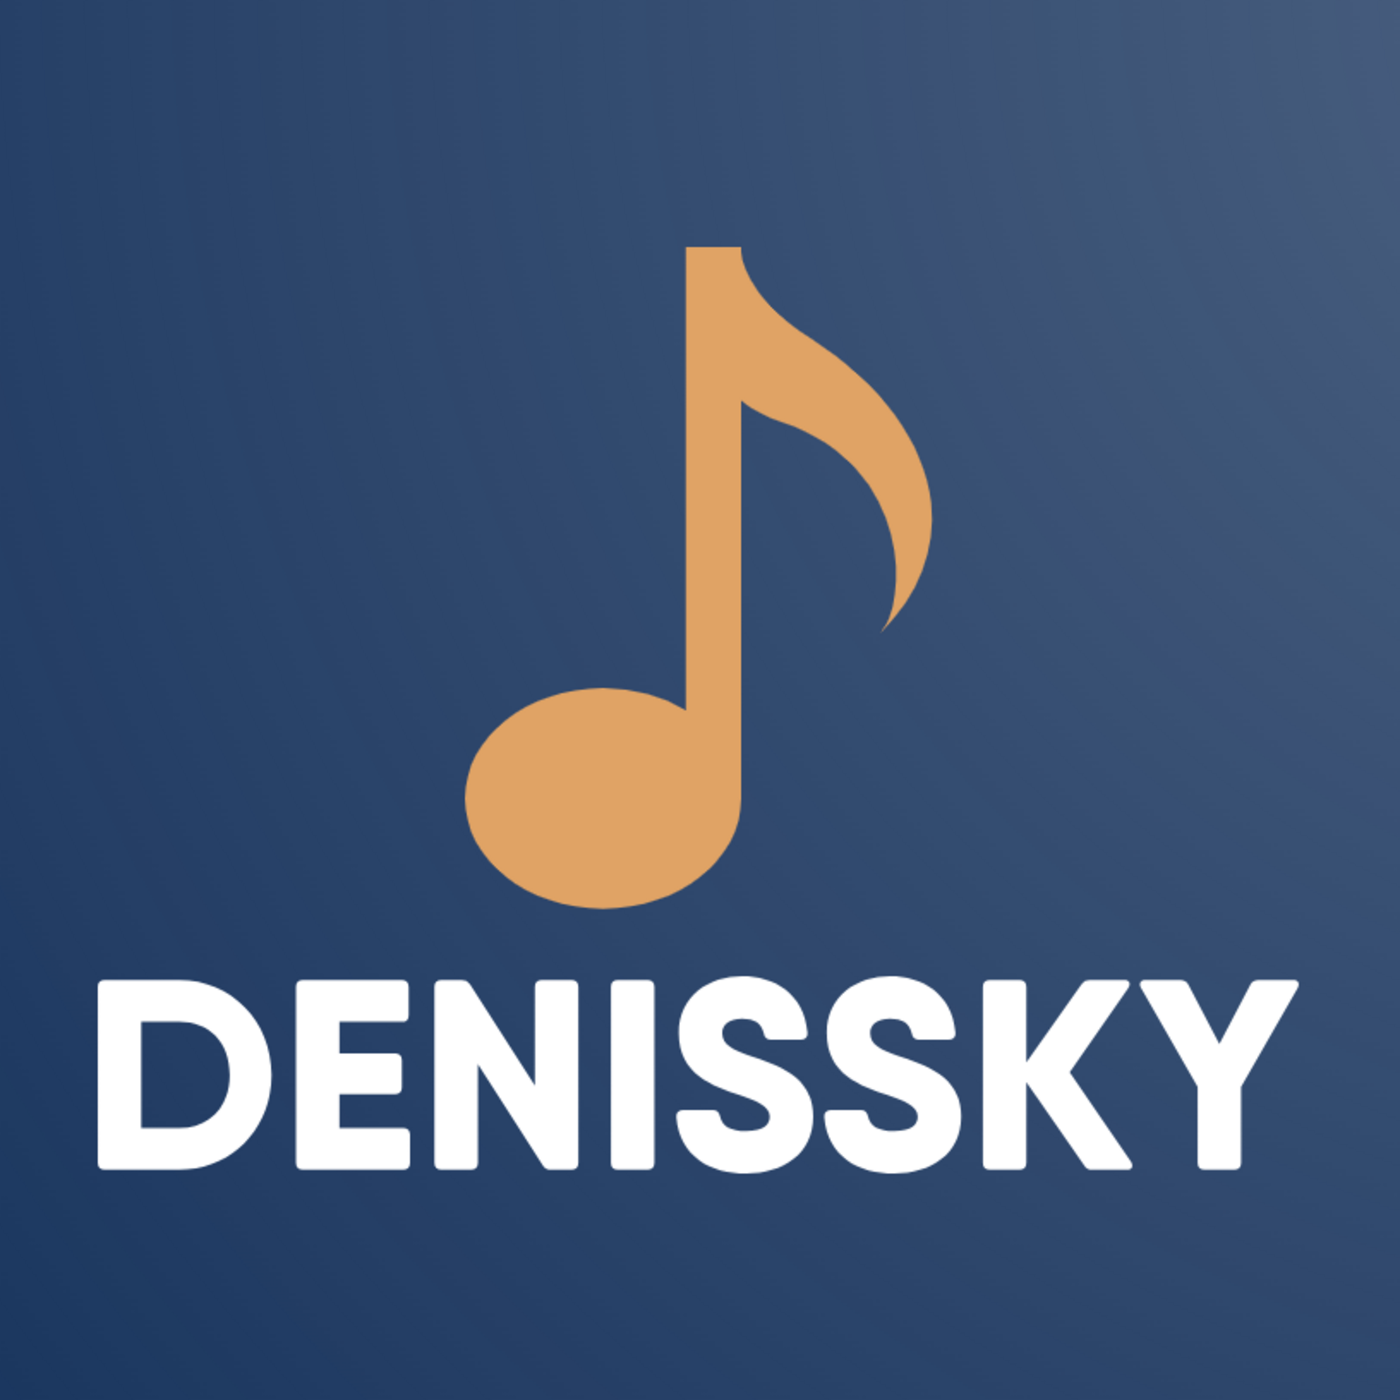 DENISSKY's music